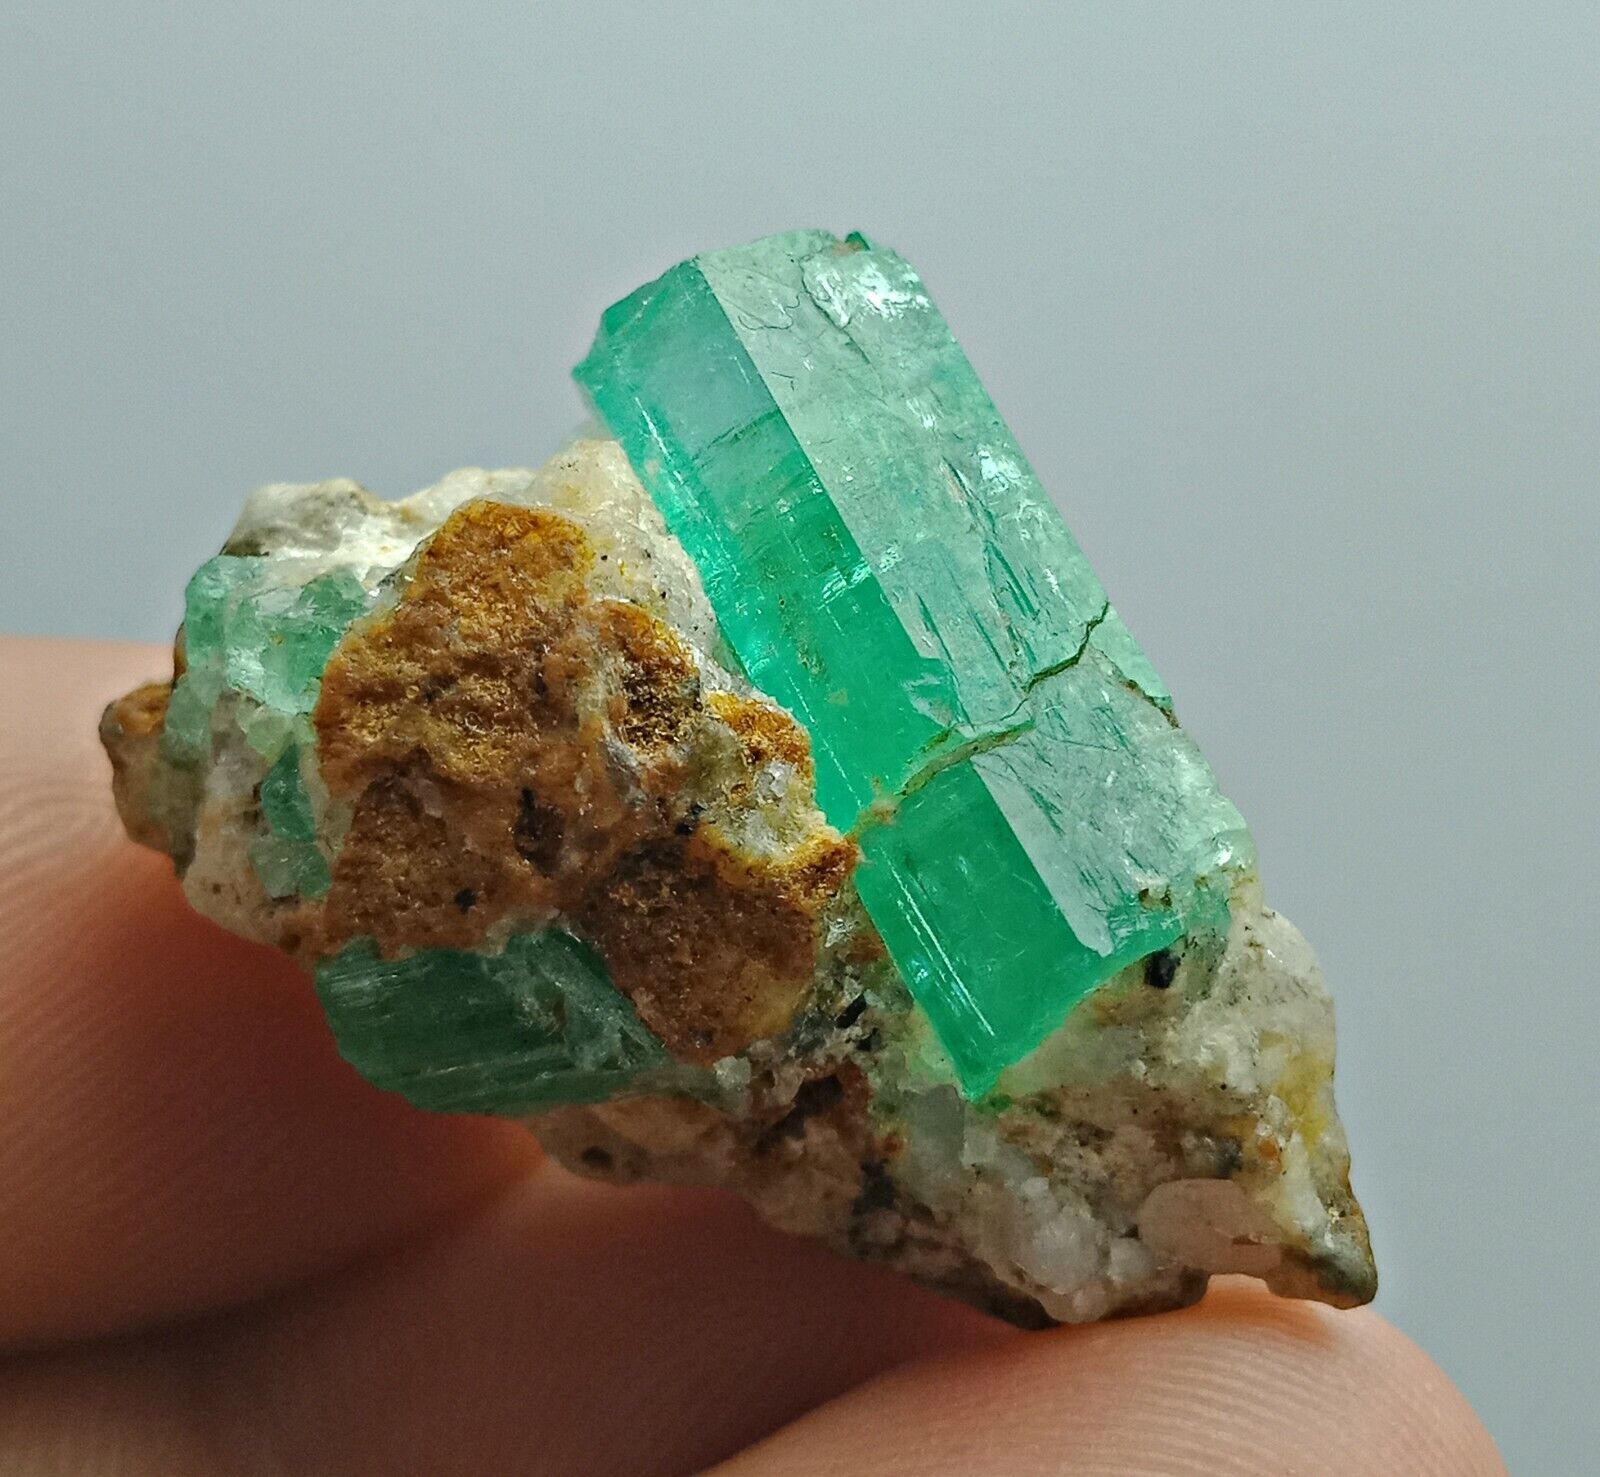 40 CT Well terminated Juicy Top emerald Crystals on matrix Panjshir Afghanistan